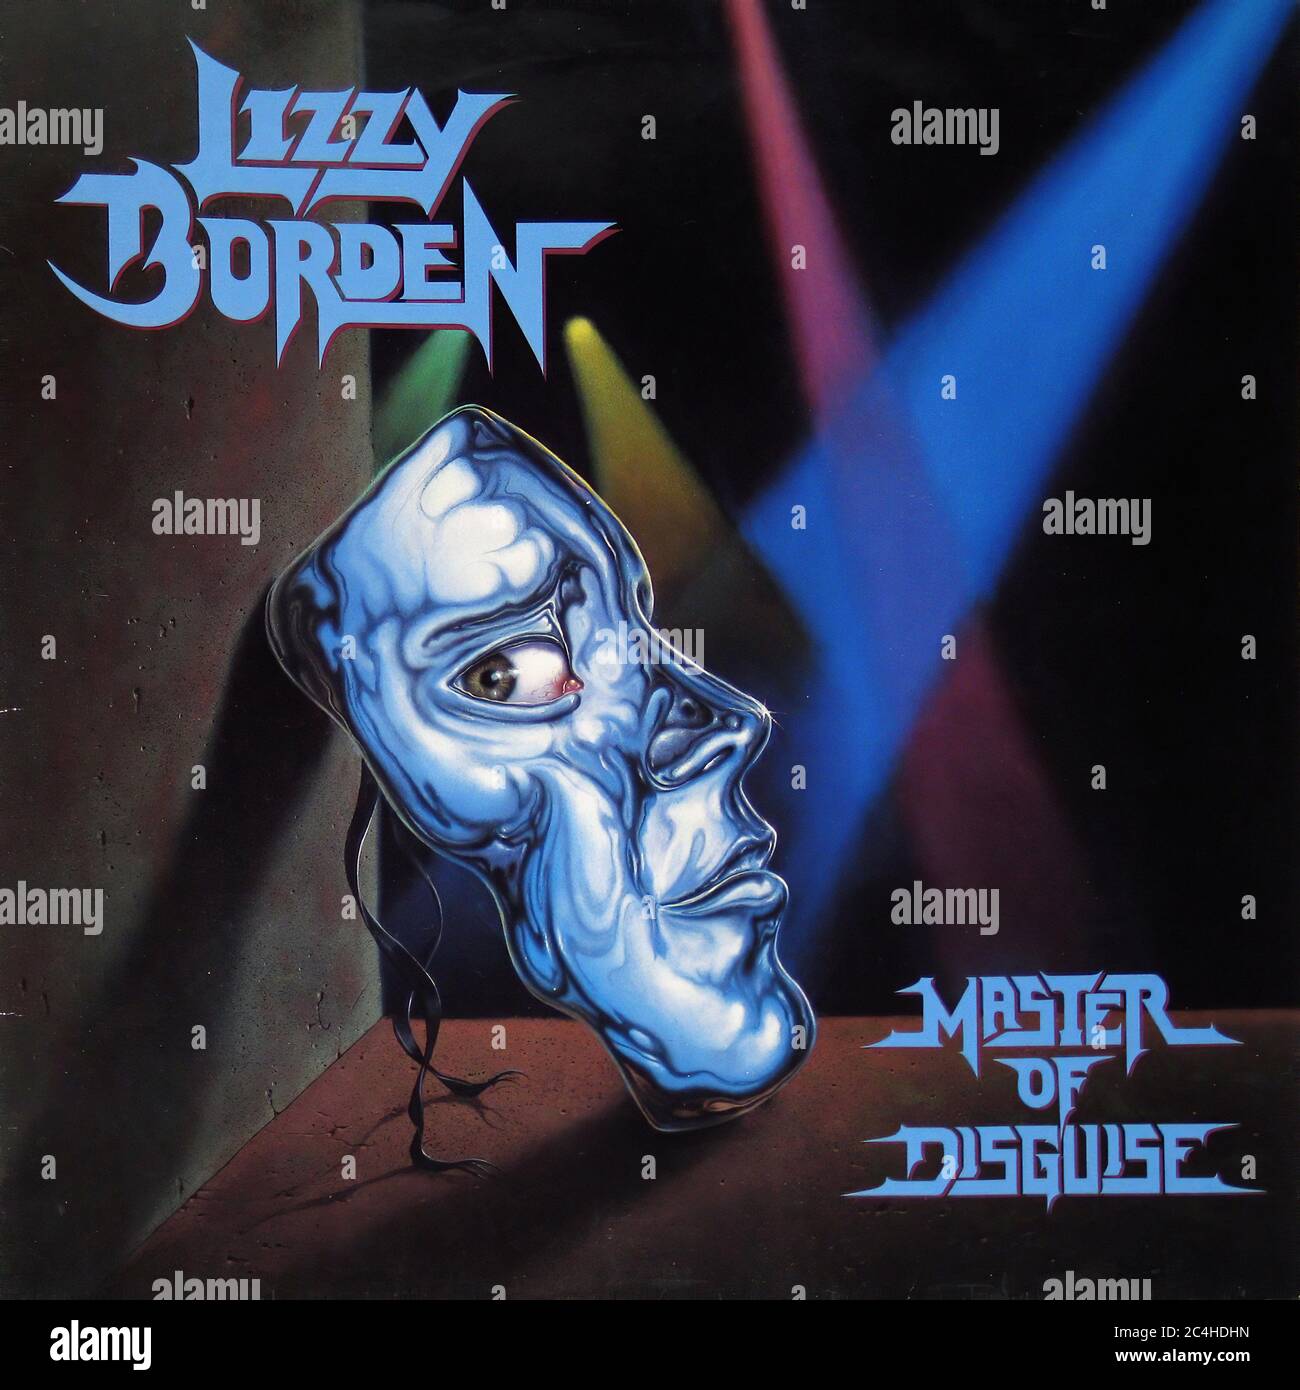 Lizzy Borden Master of Discoise 12'' Vinyl LP - copertina vintage Foto Stock